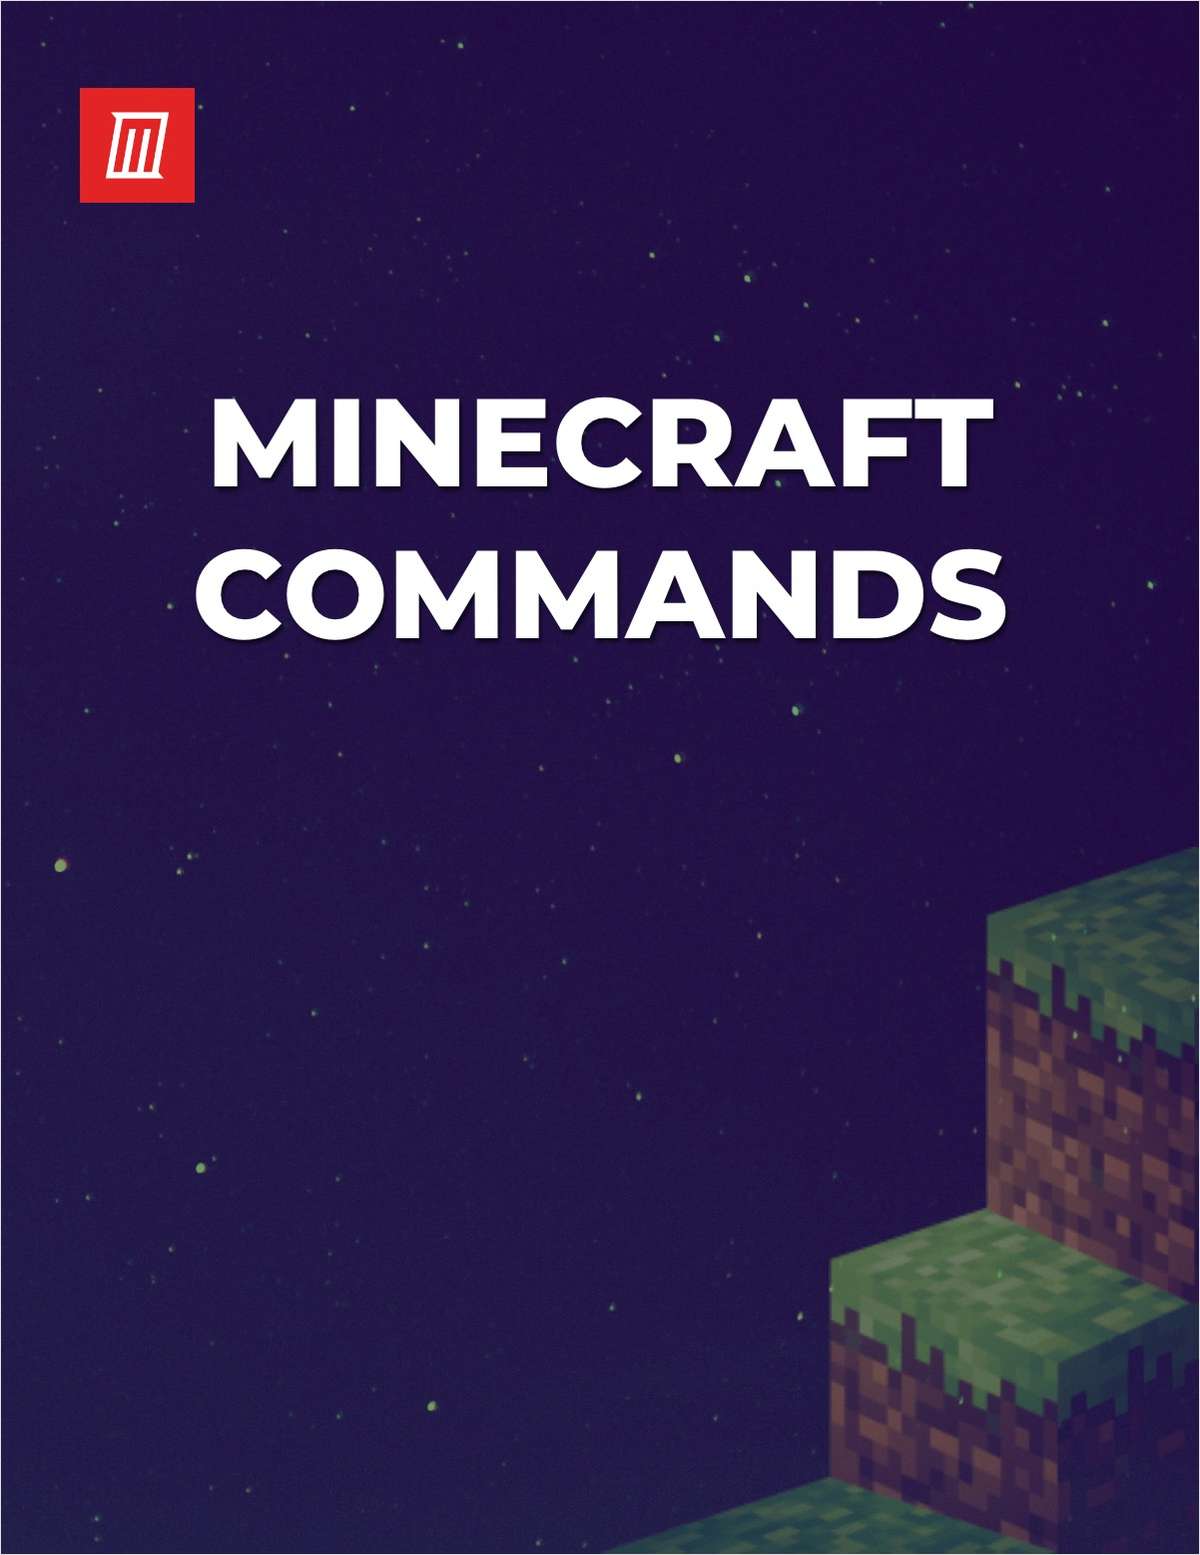 100+ Useful Minecraft Commands